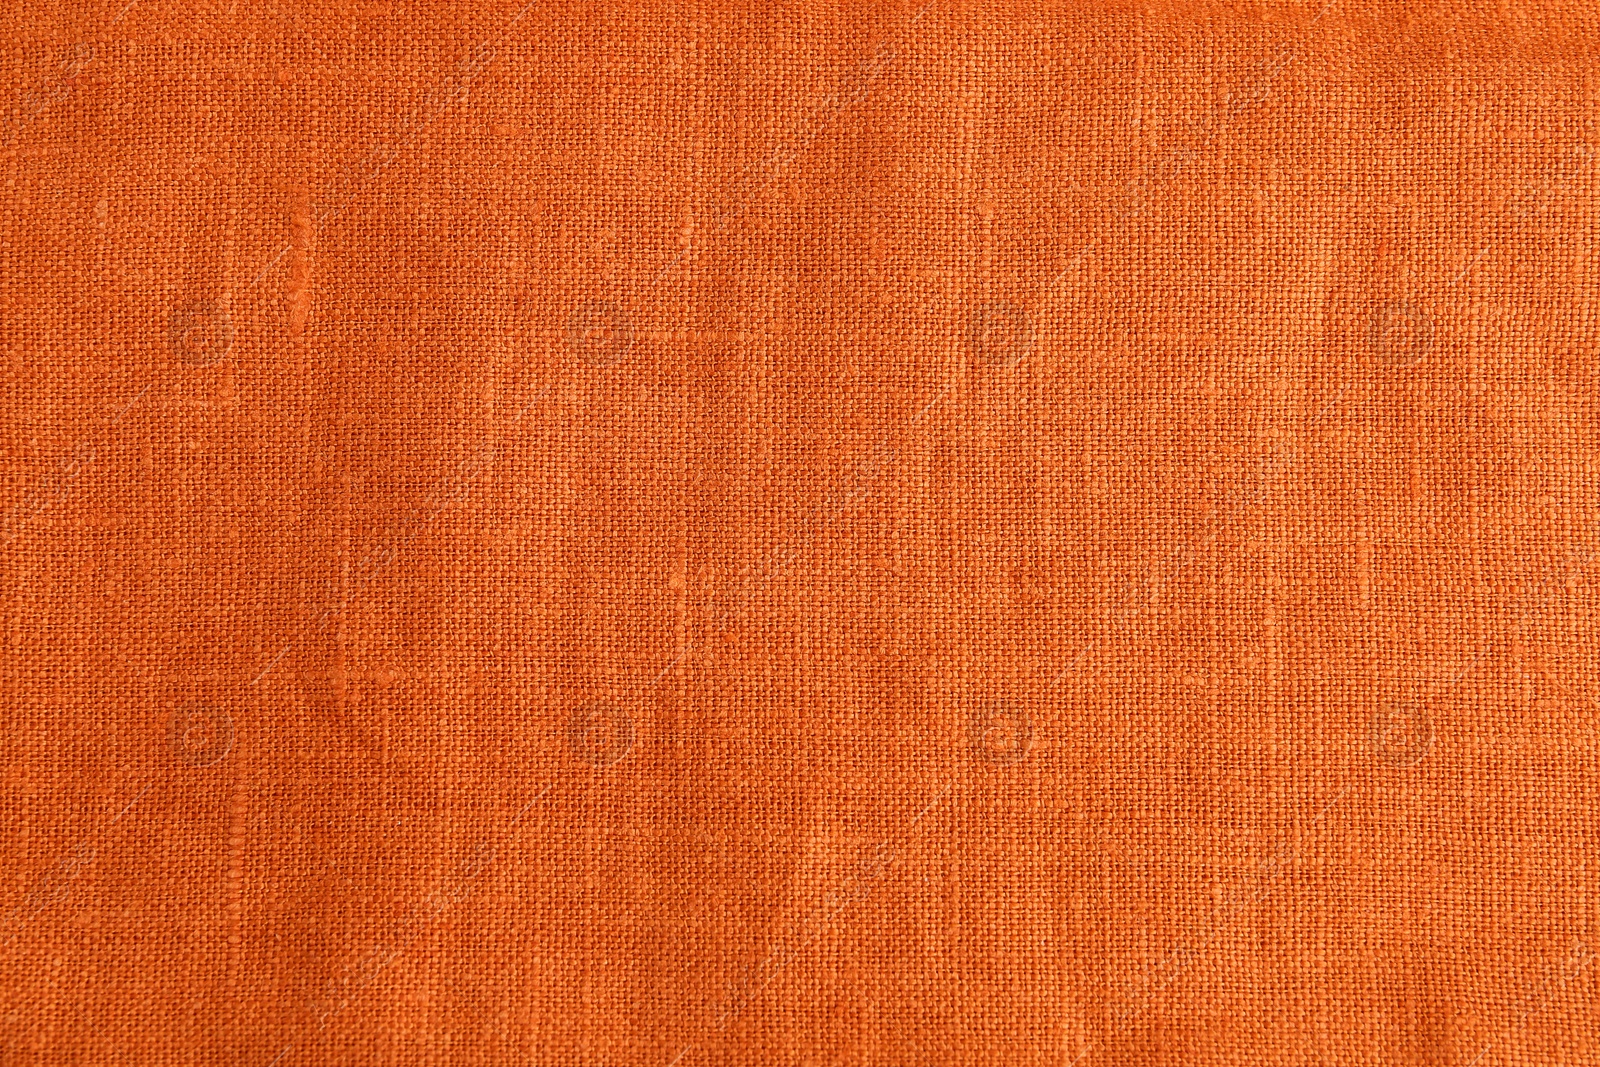 Photo of Texture of beautiful orange fabric as background, closeup